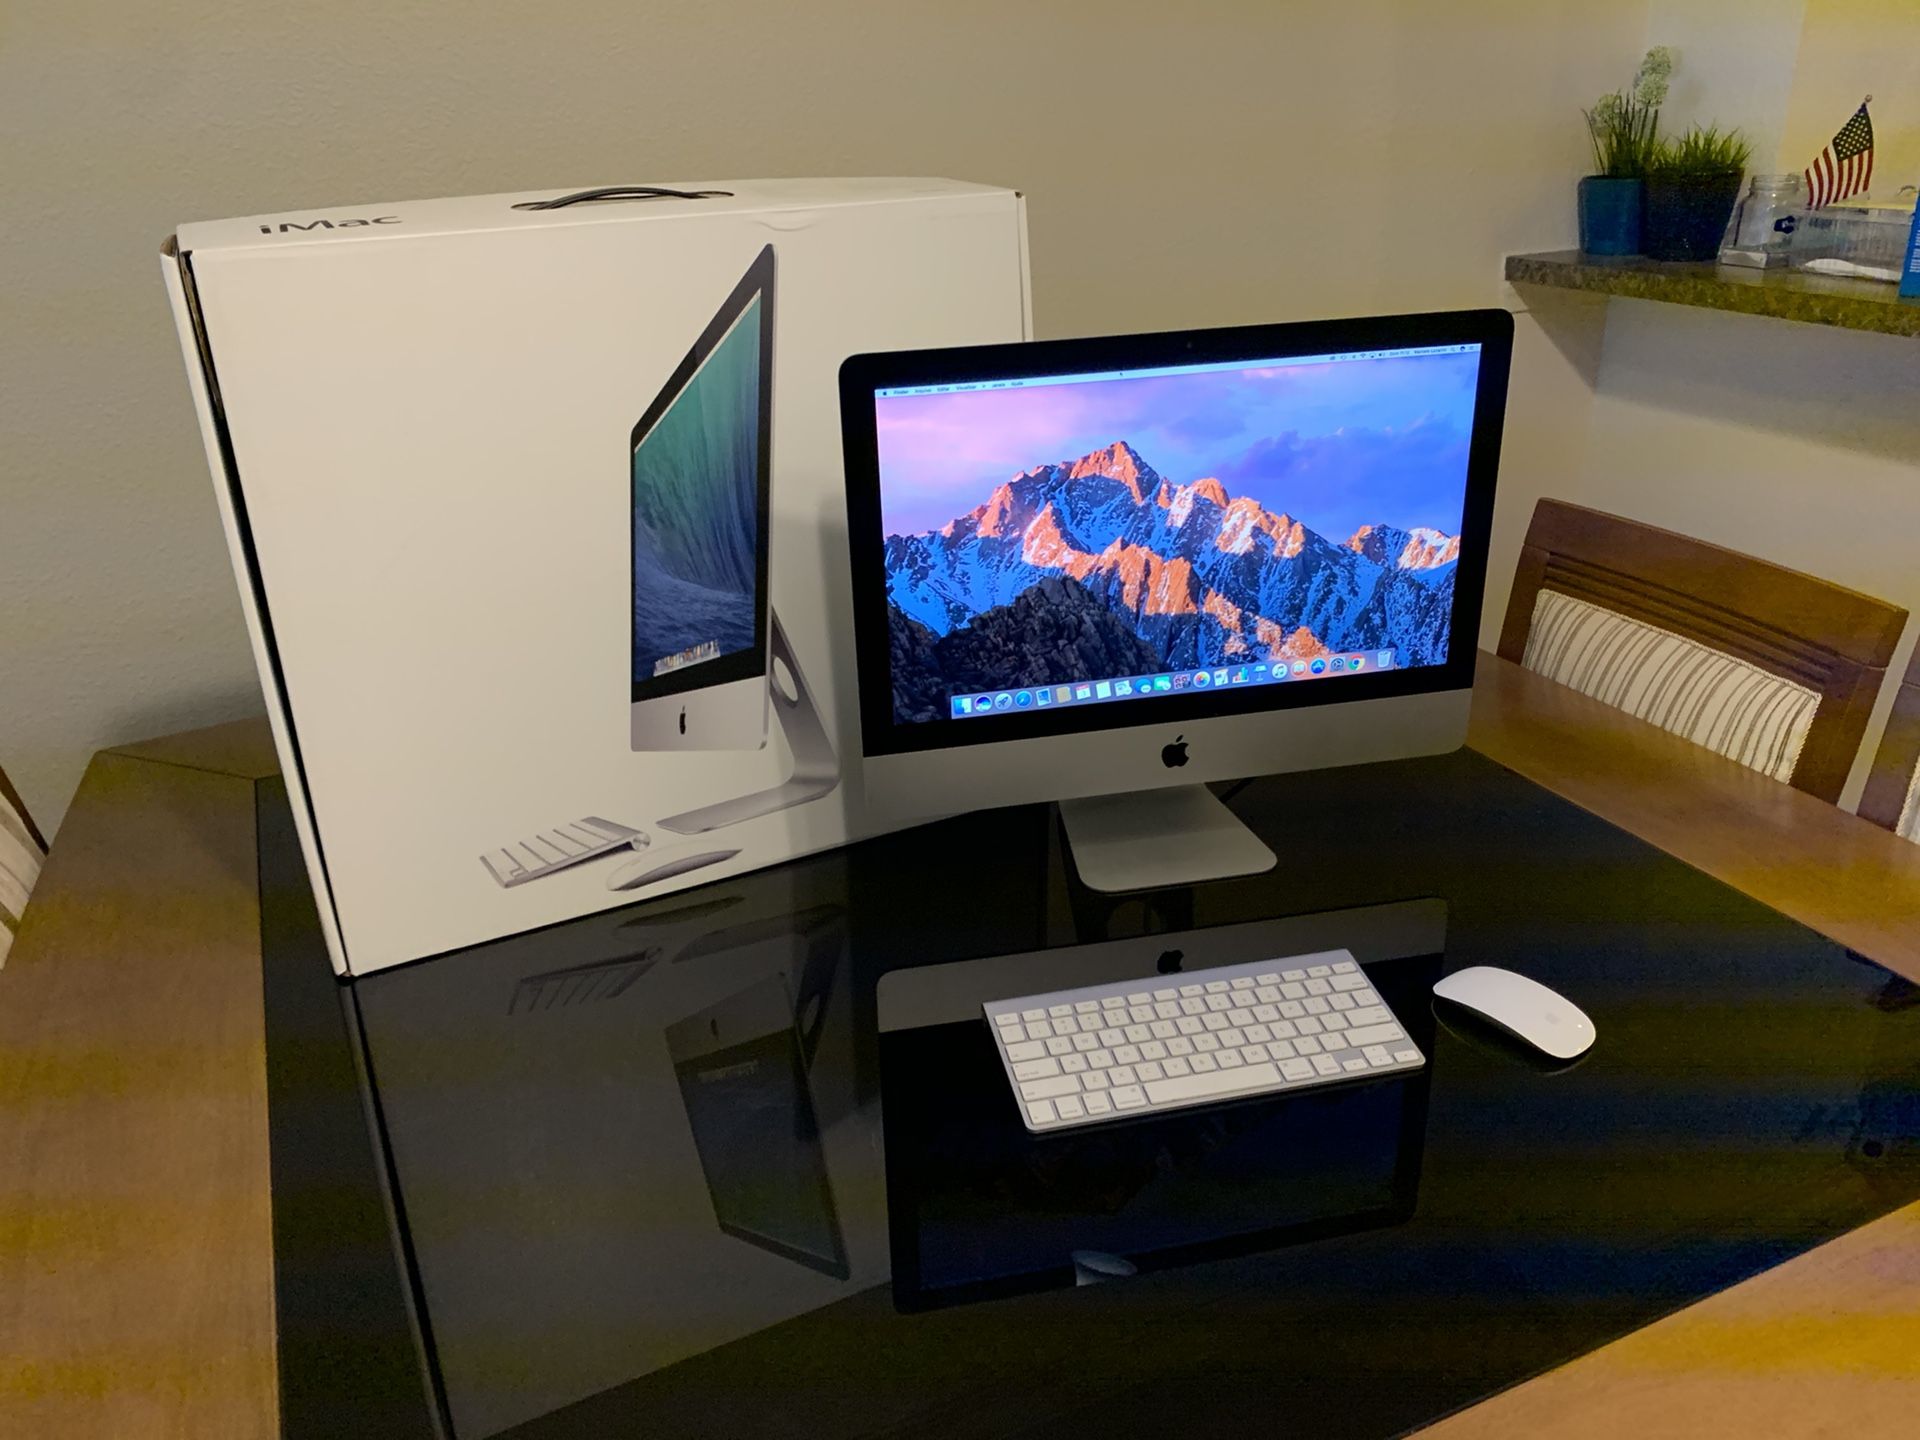 Apple iMac 21.5” Intel Core I5, 8gb Memory, 500gb HDD